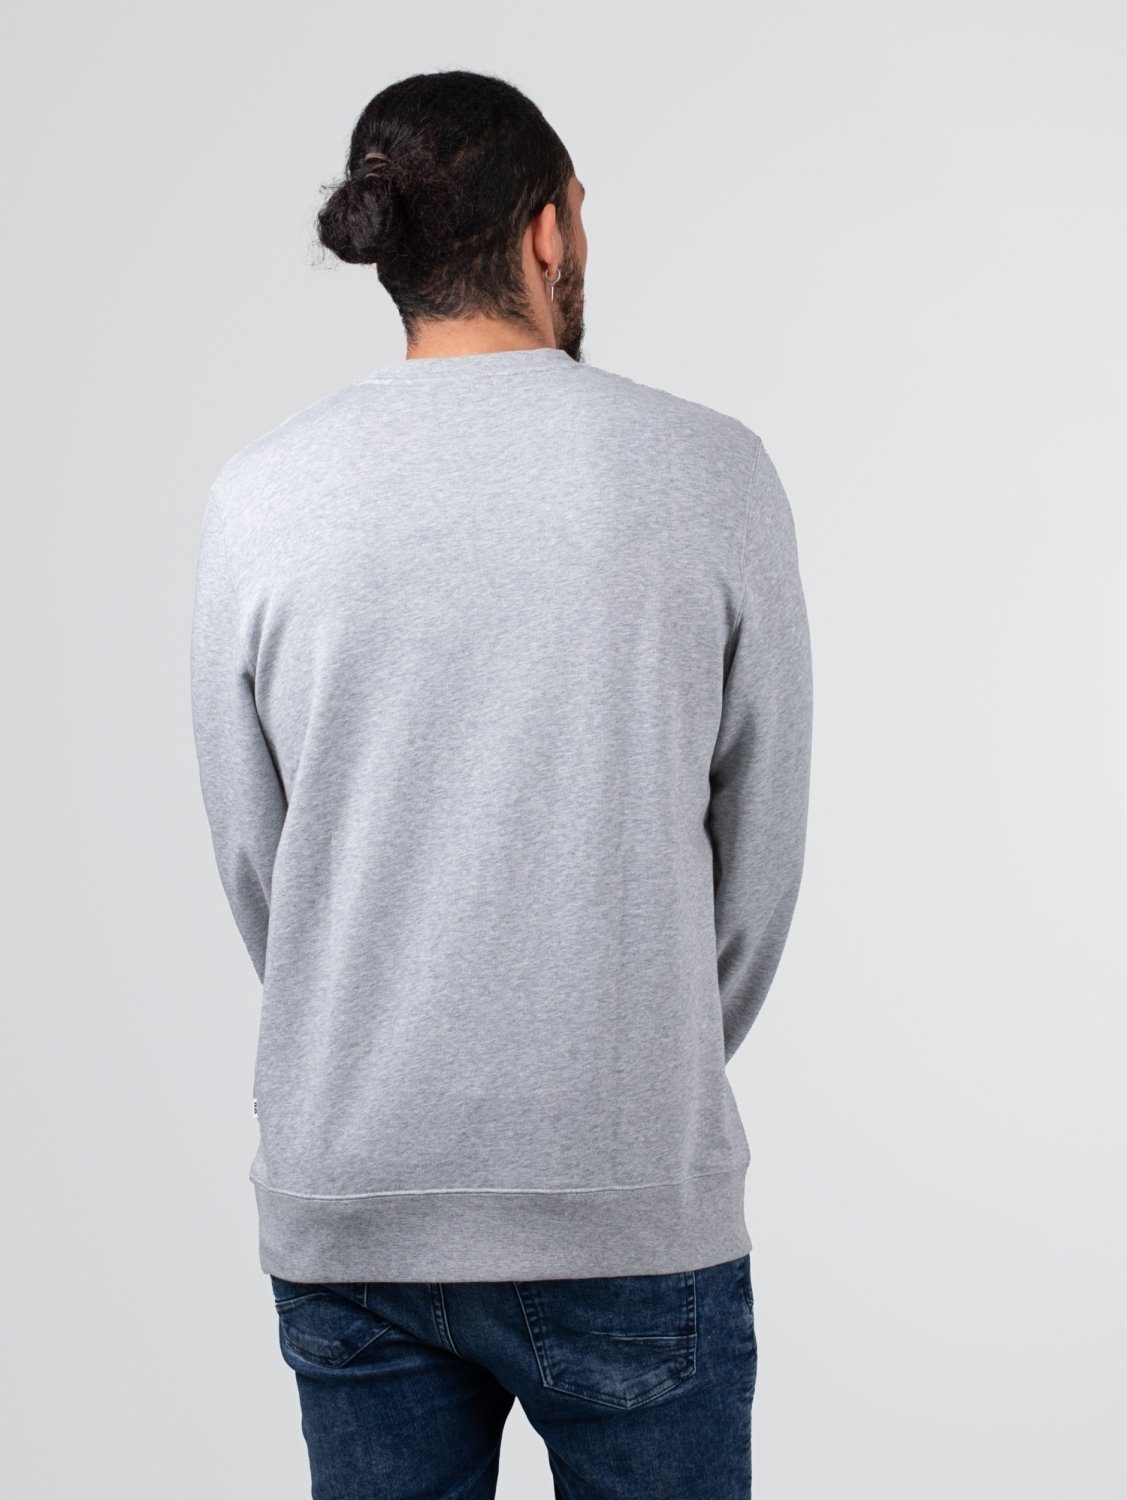 Sweatshirt Grey Hugh Wood Logo WOOD Melange Wood Sweater WOOD